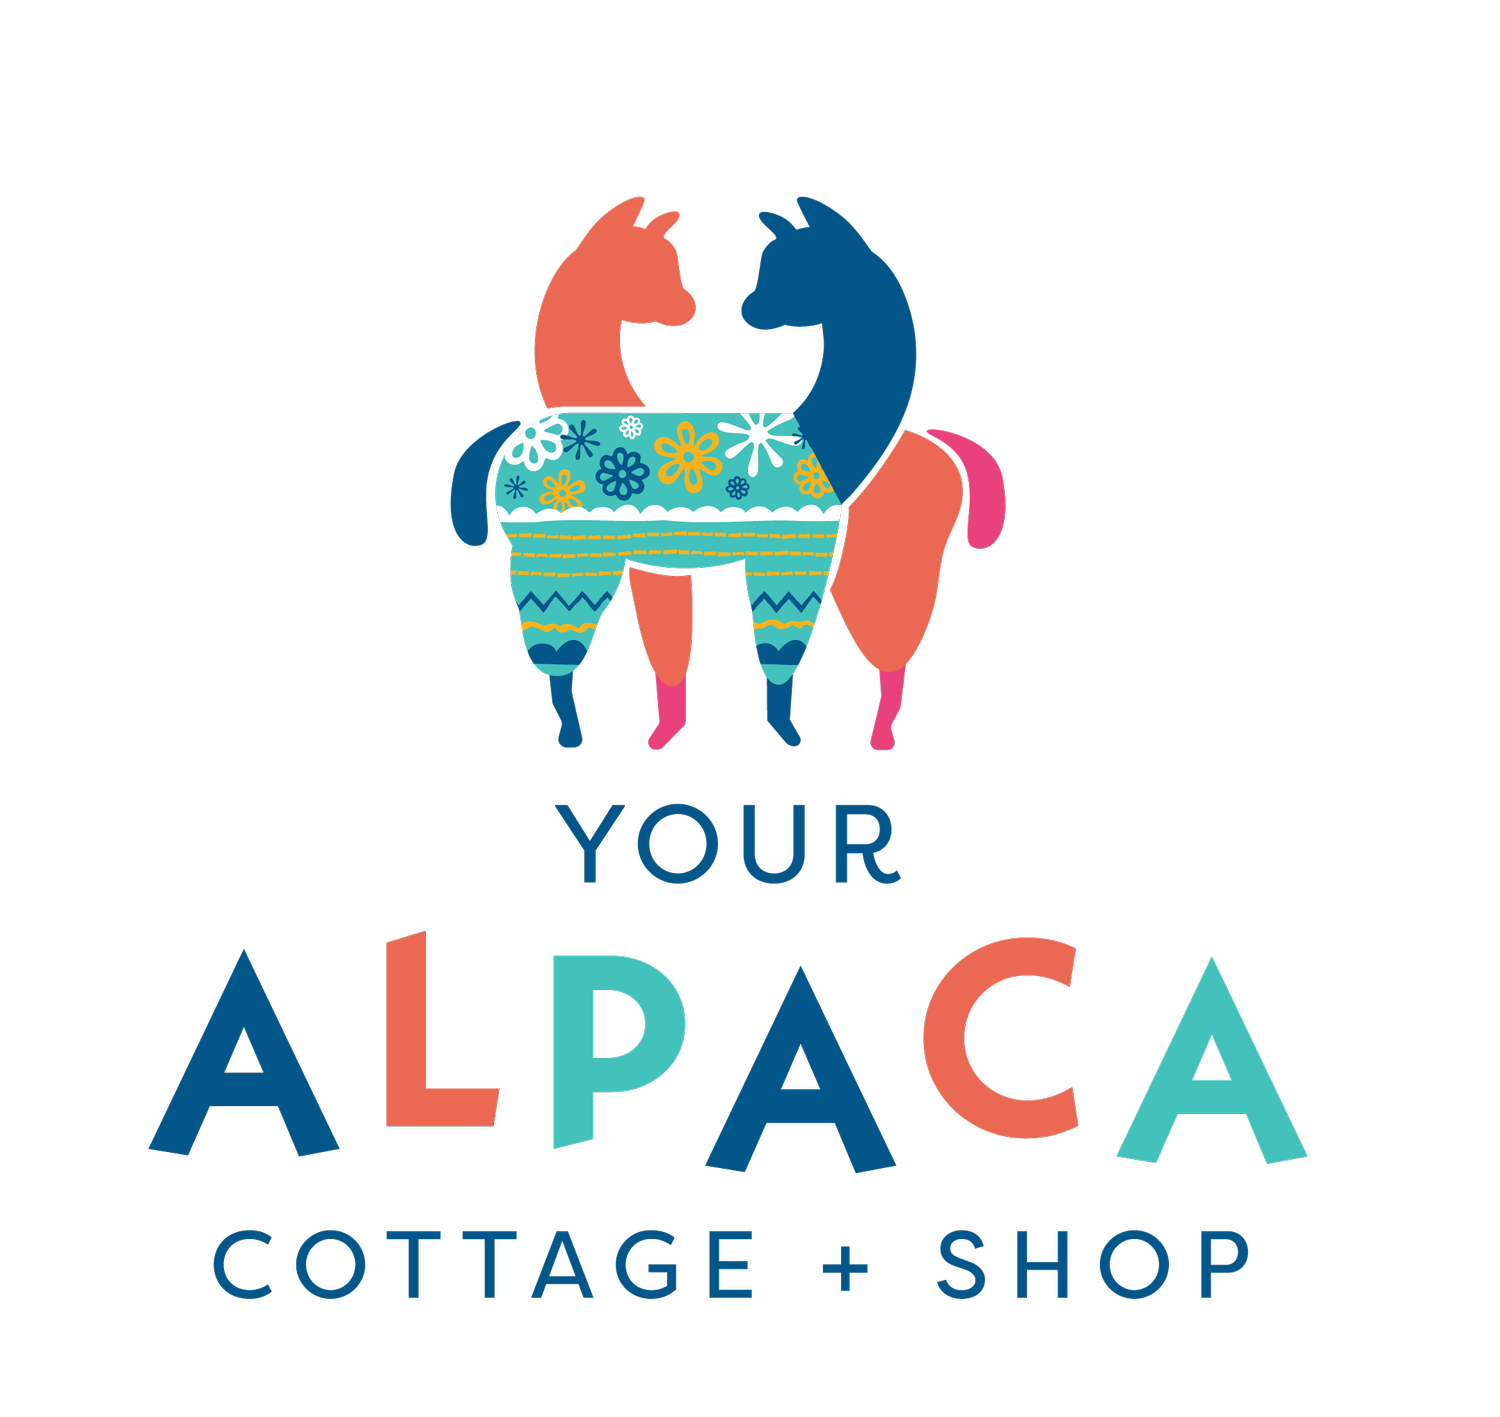 Your Alpaca Cottage